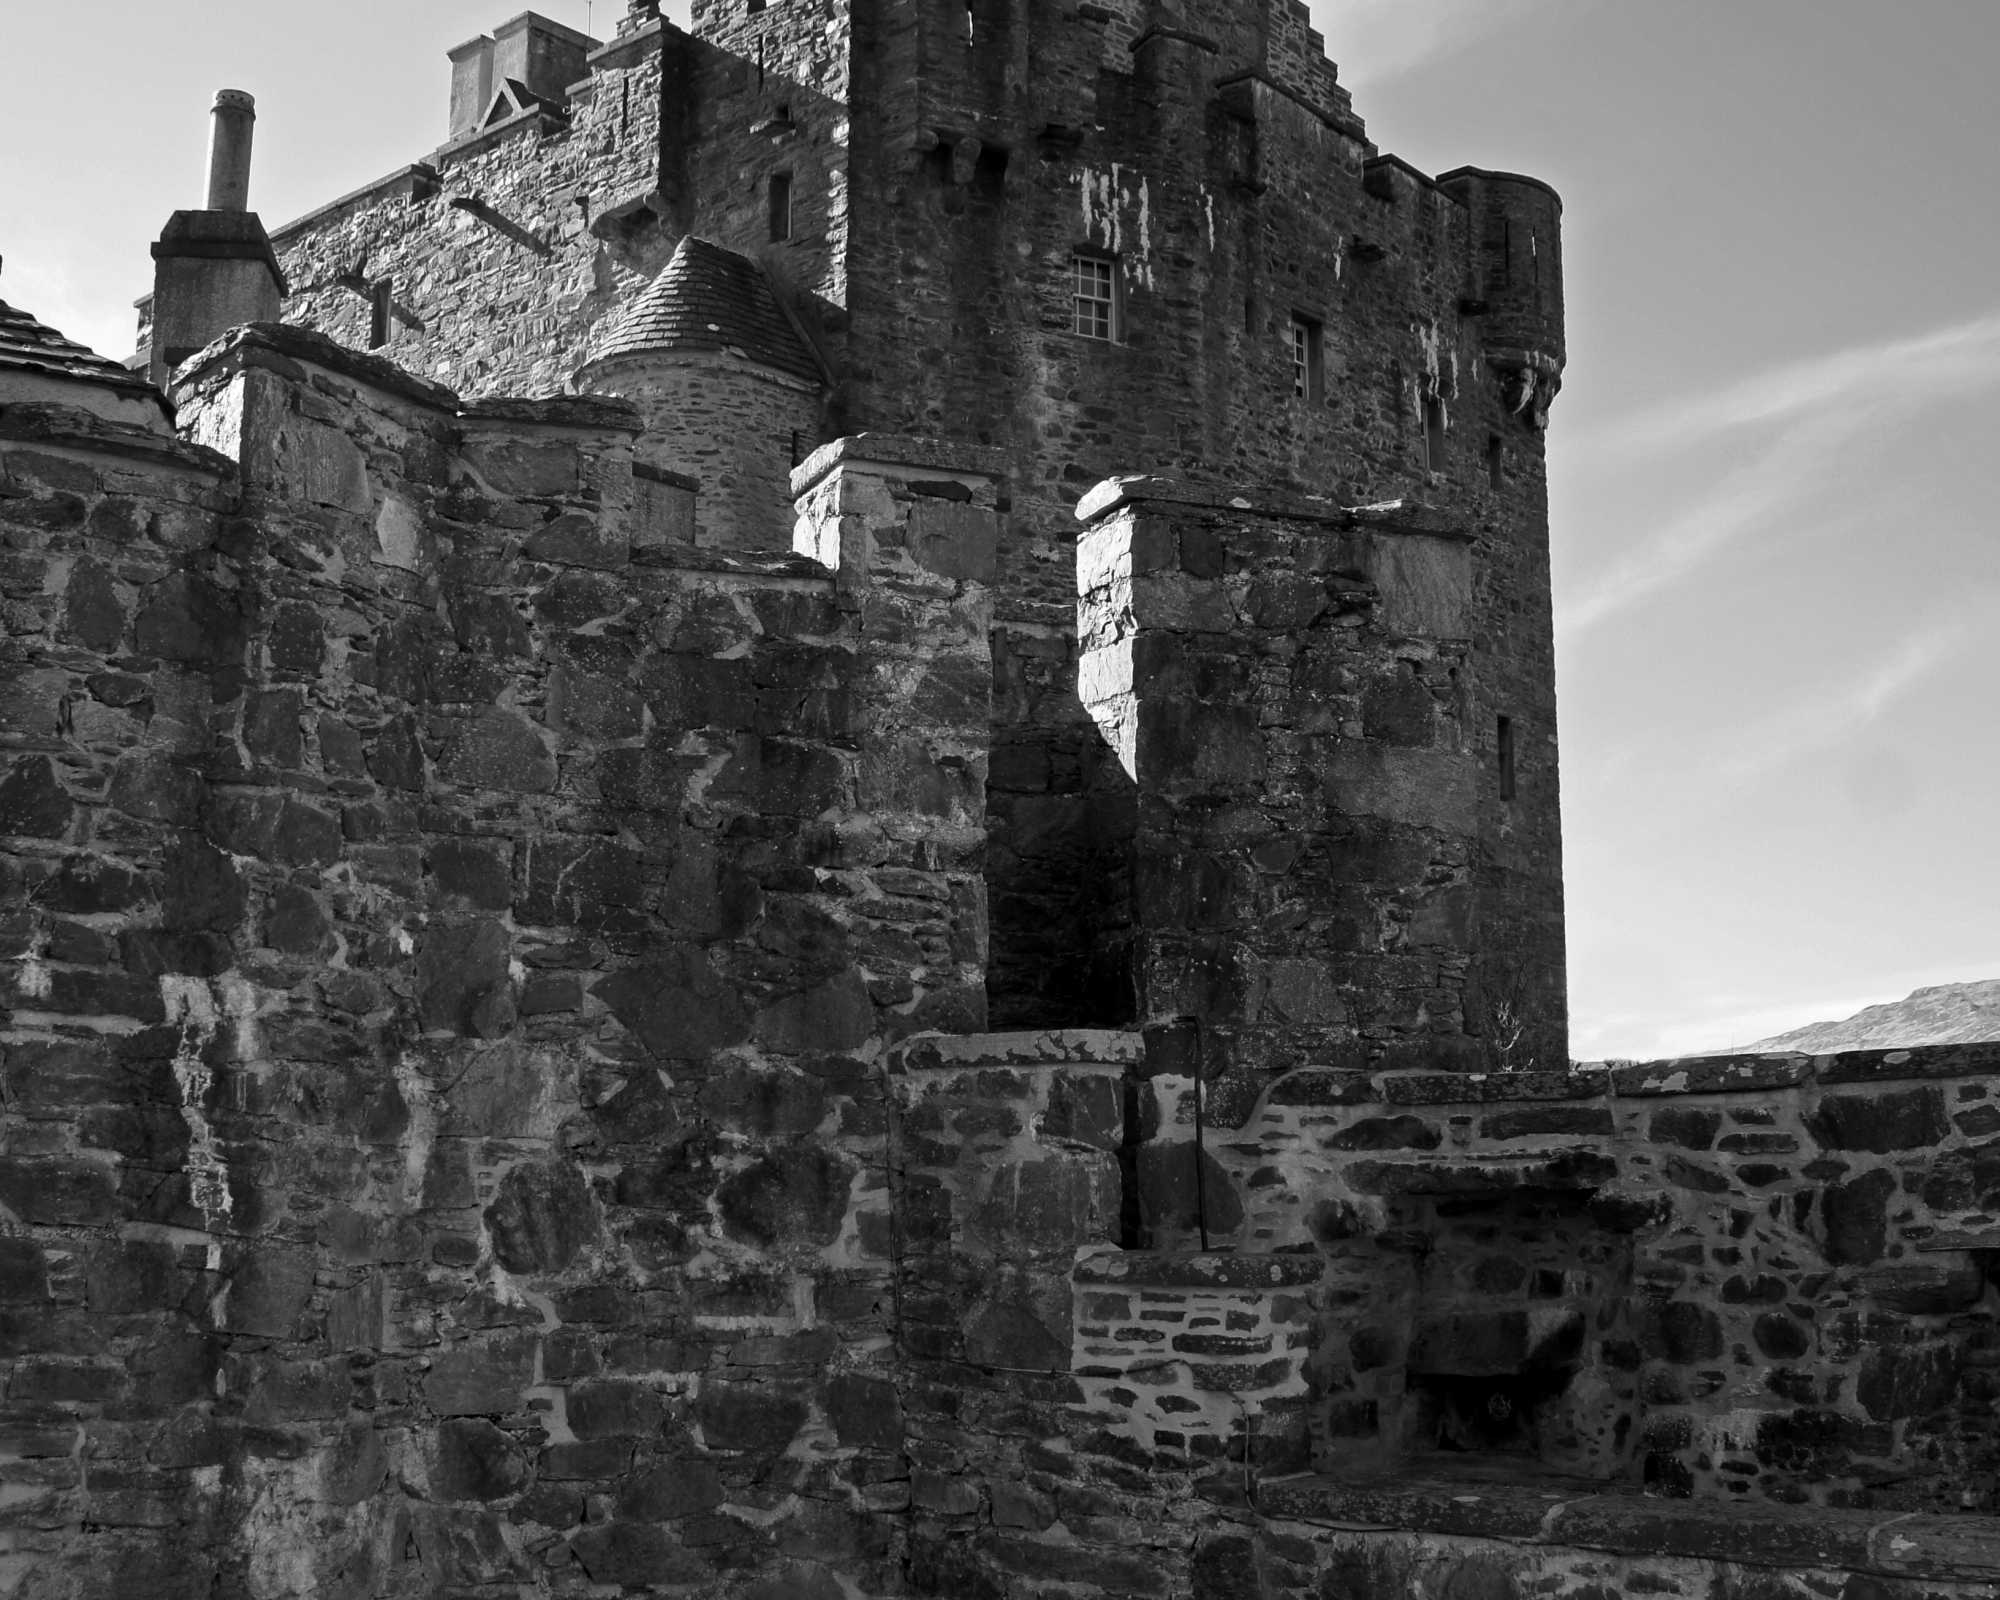 Within Eilean Donan Castle